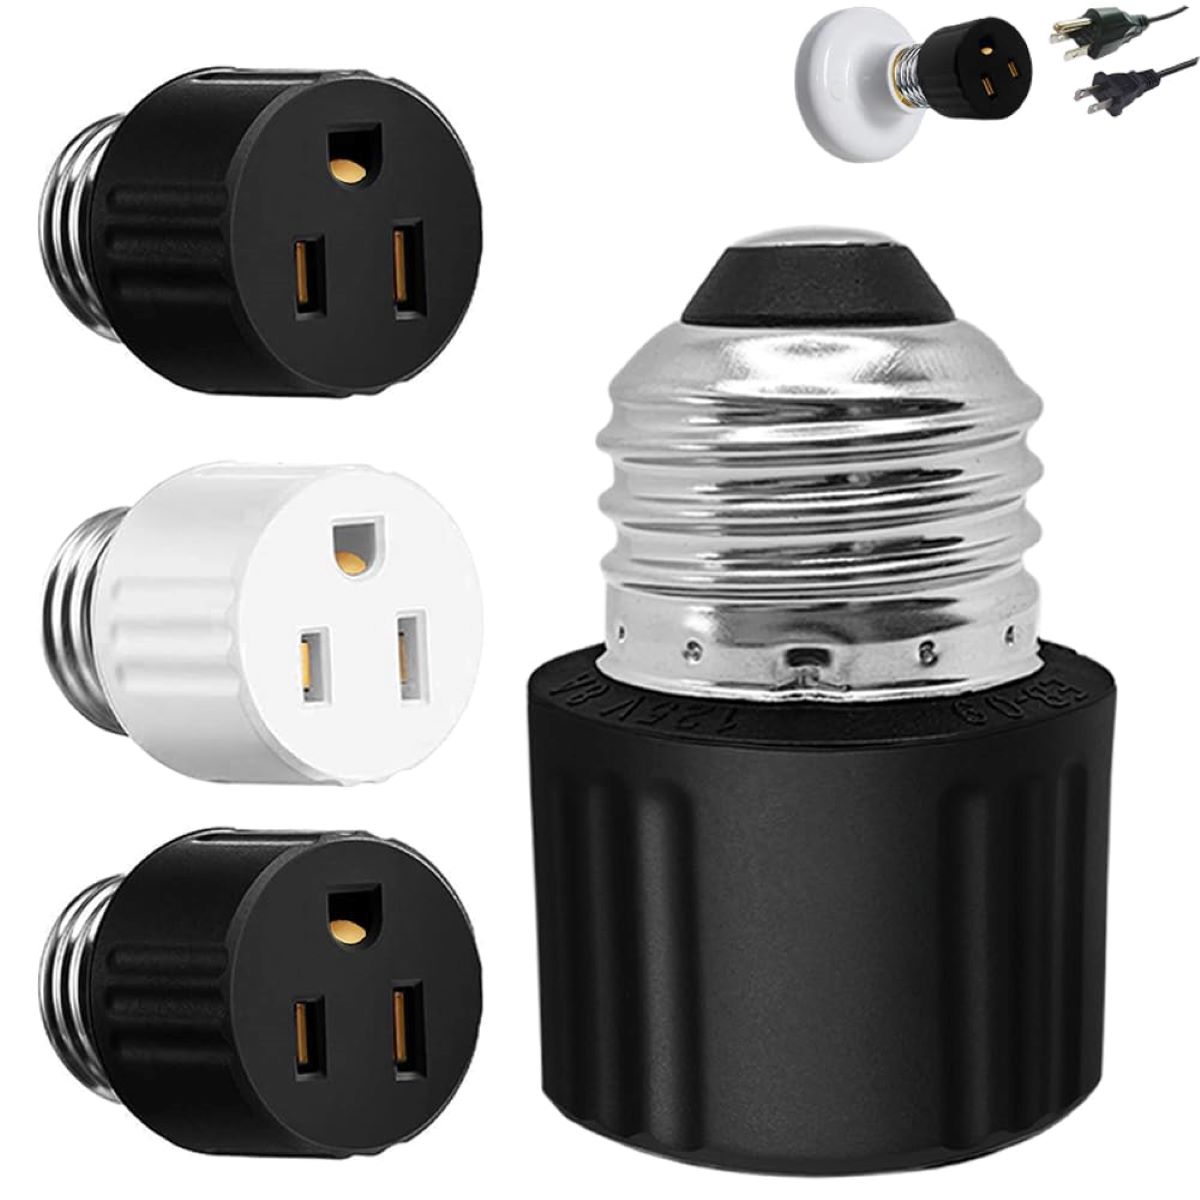 11 Best Light Socket To Outlet Adapter for 2023